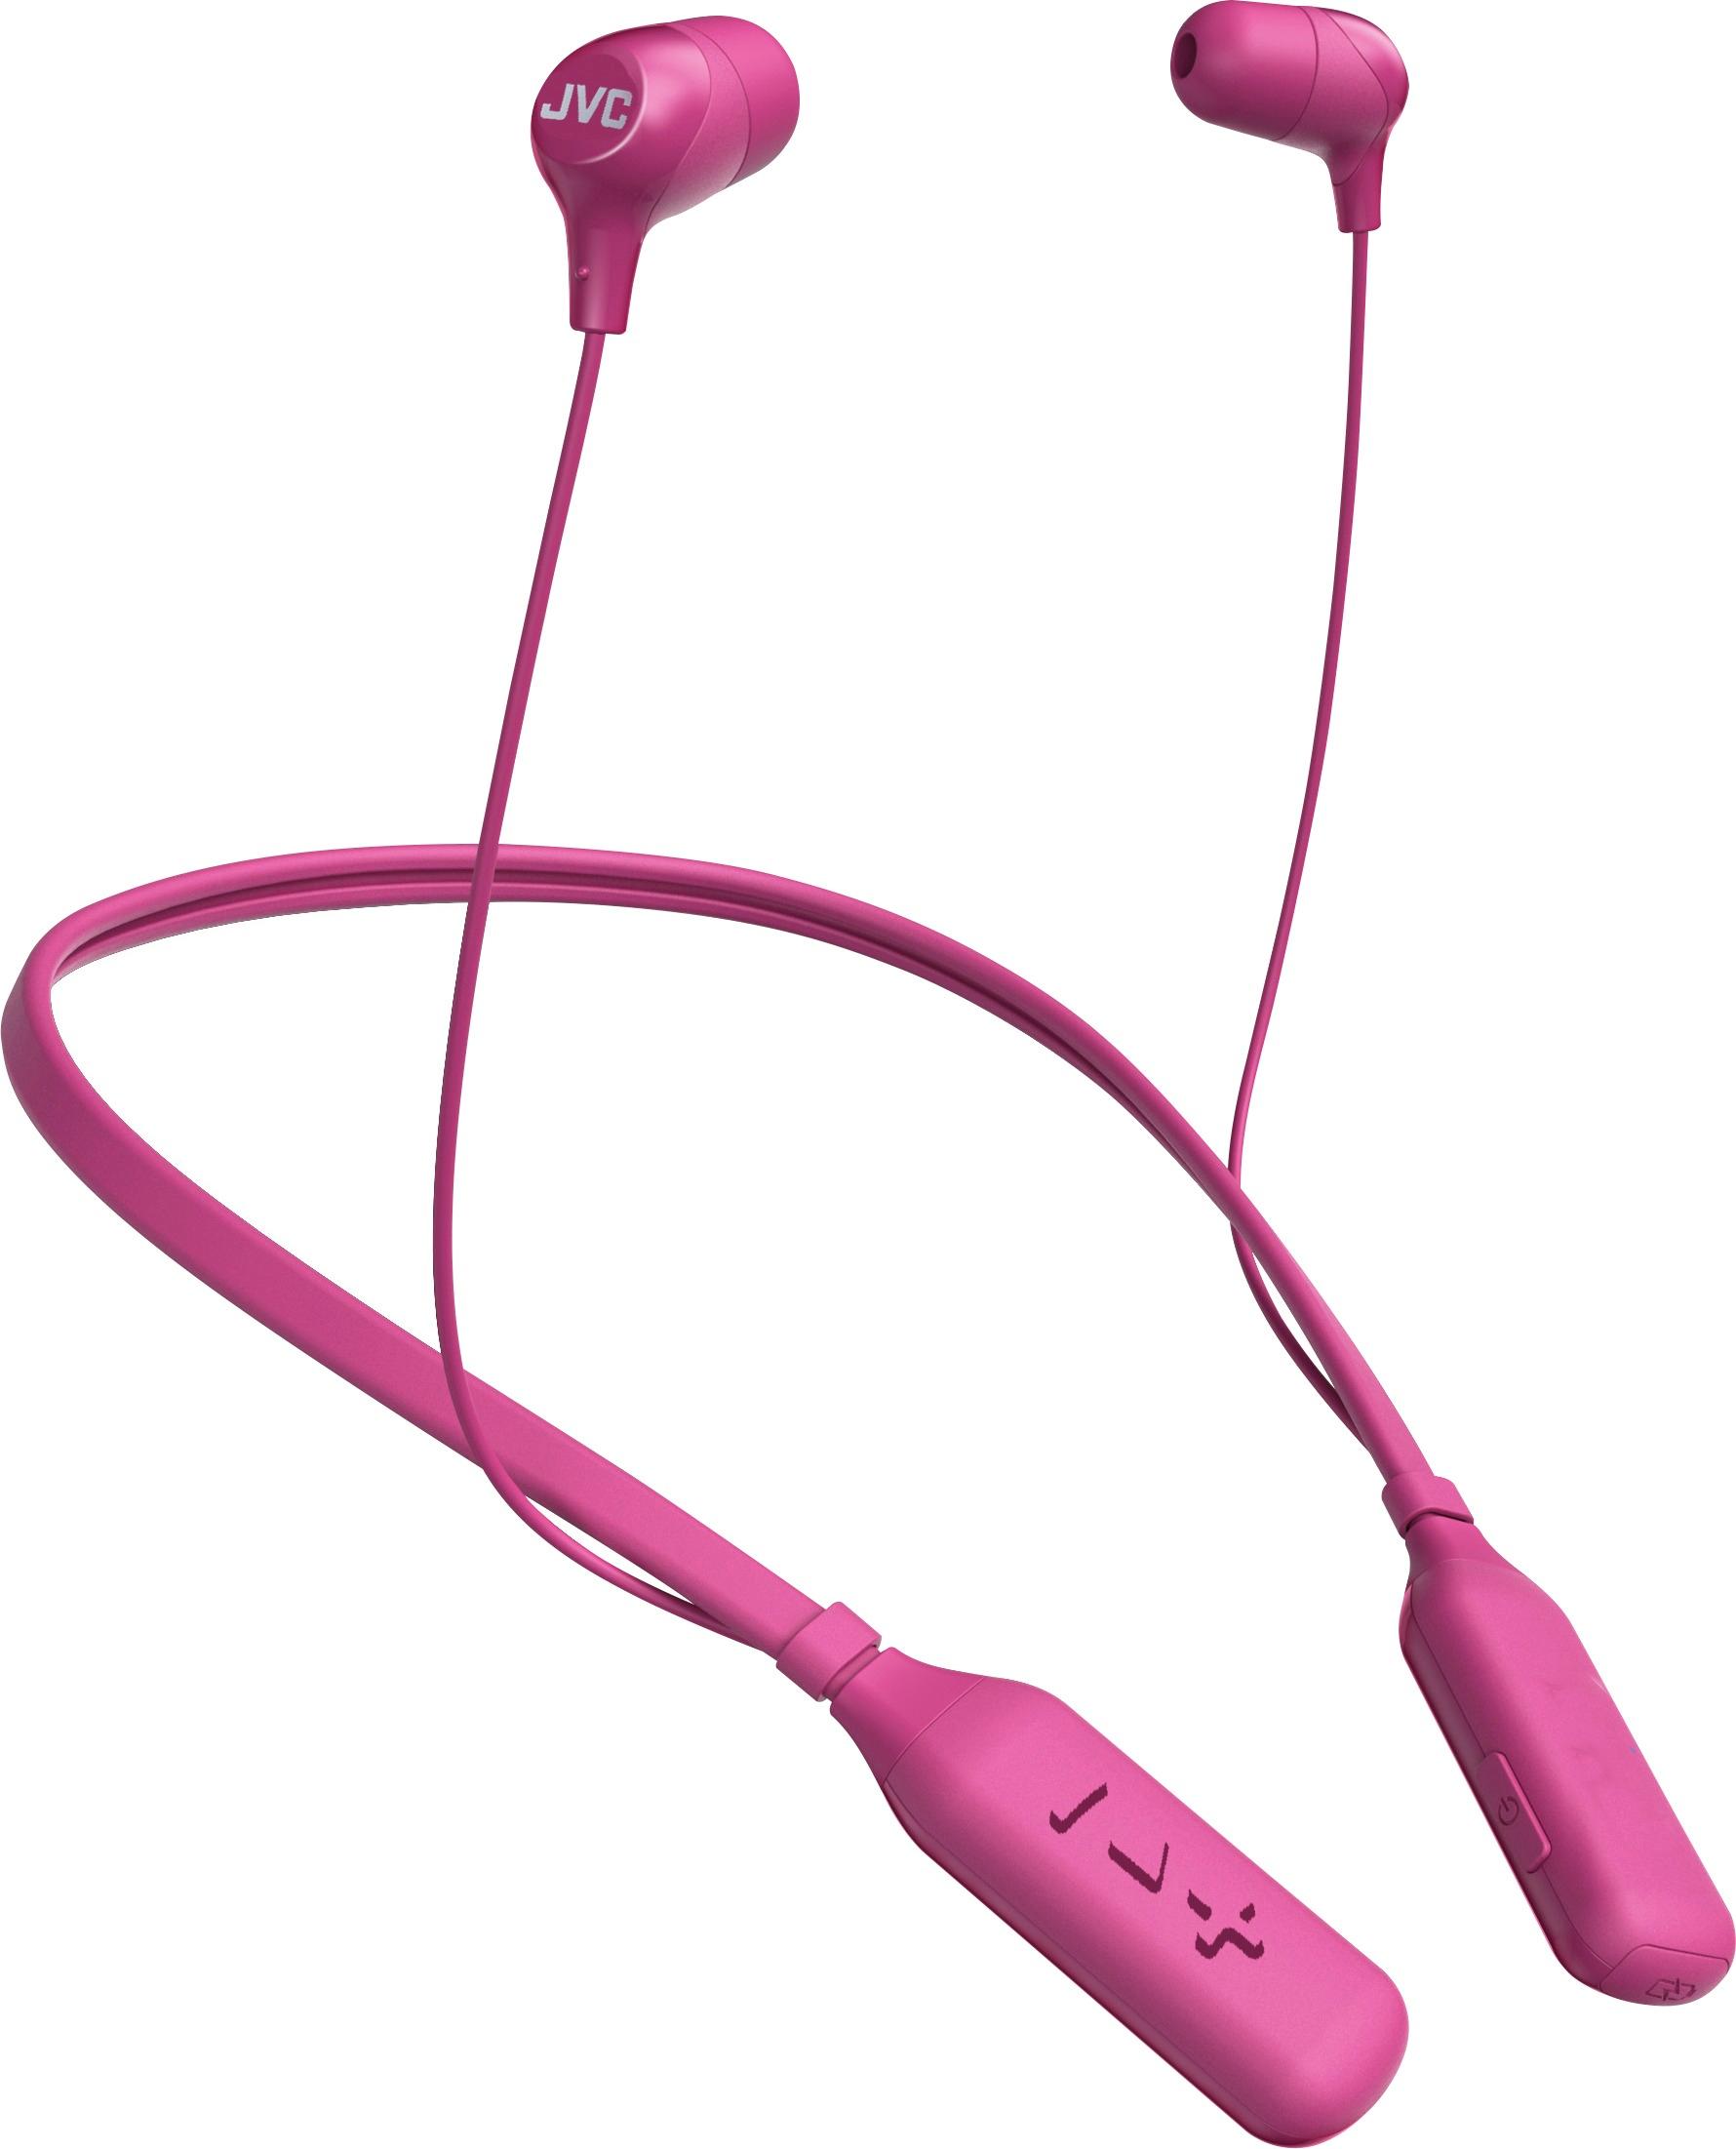 Angle View: JVC - HA FX39BT Marshmallow Wireless In-Ear Headphones - Pink